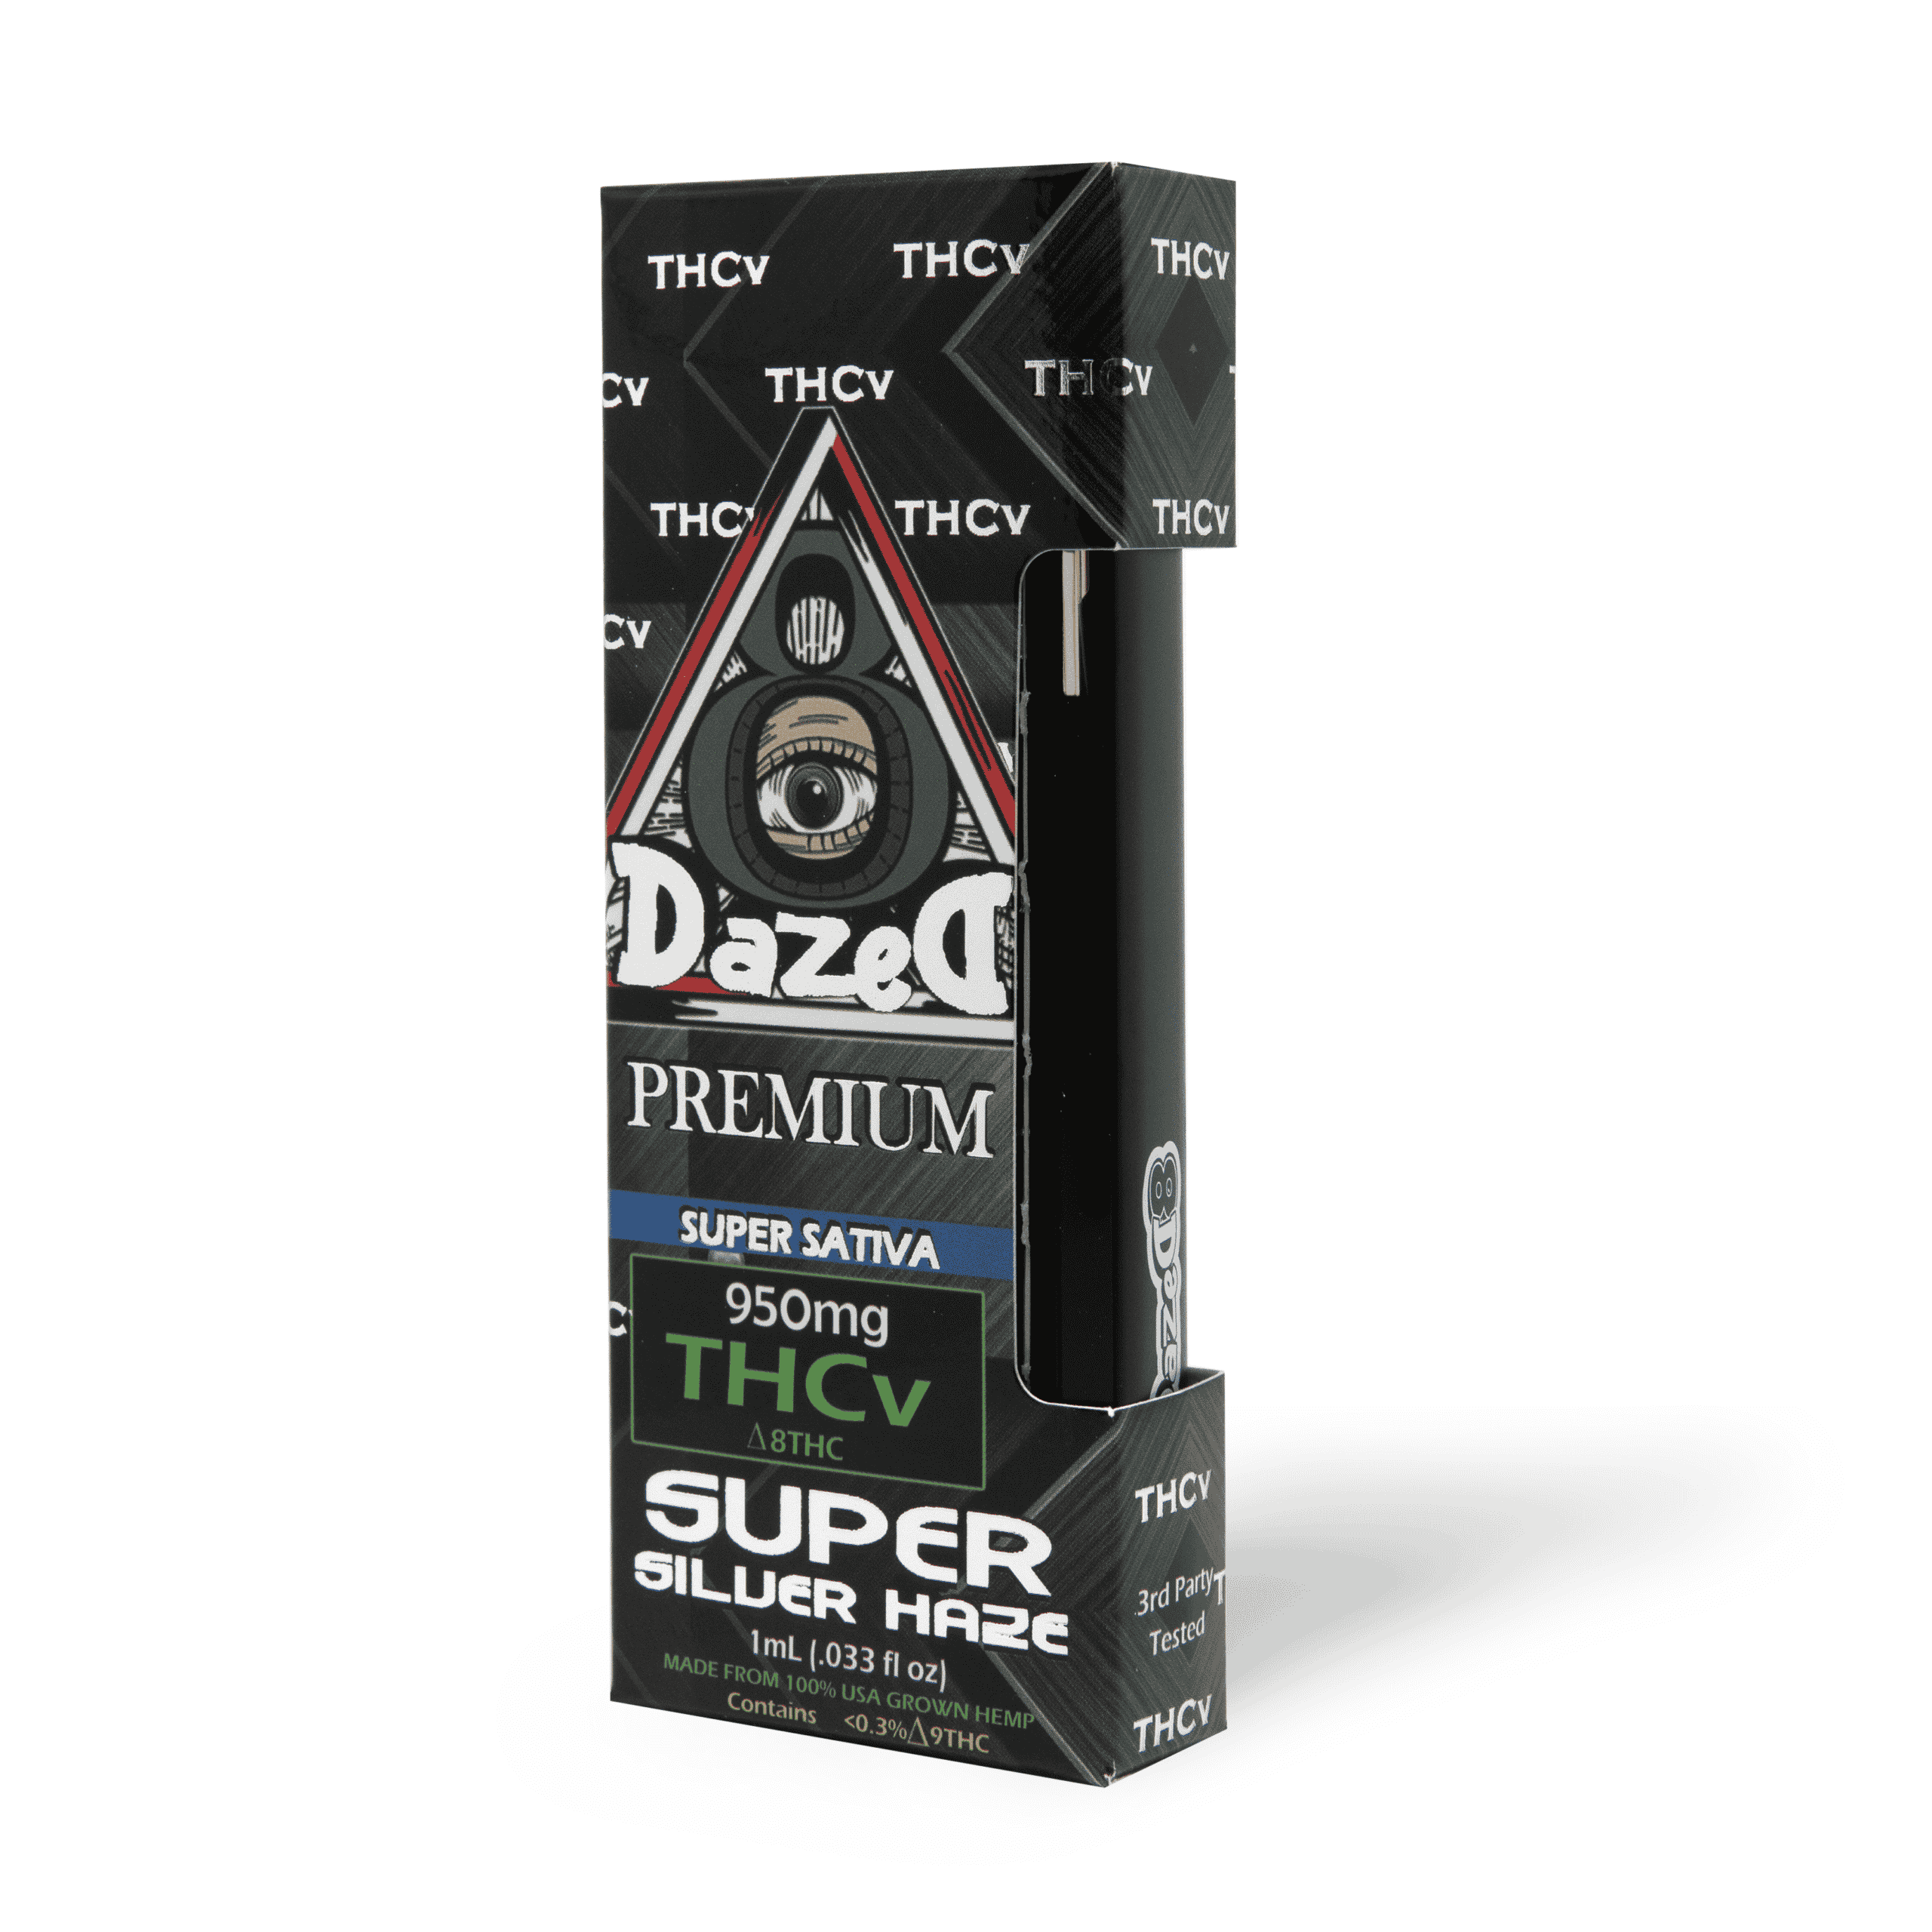 DazeD8 Super Silver Haze Delta 8 THCV Disposable (1g) Best Price